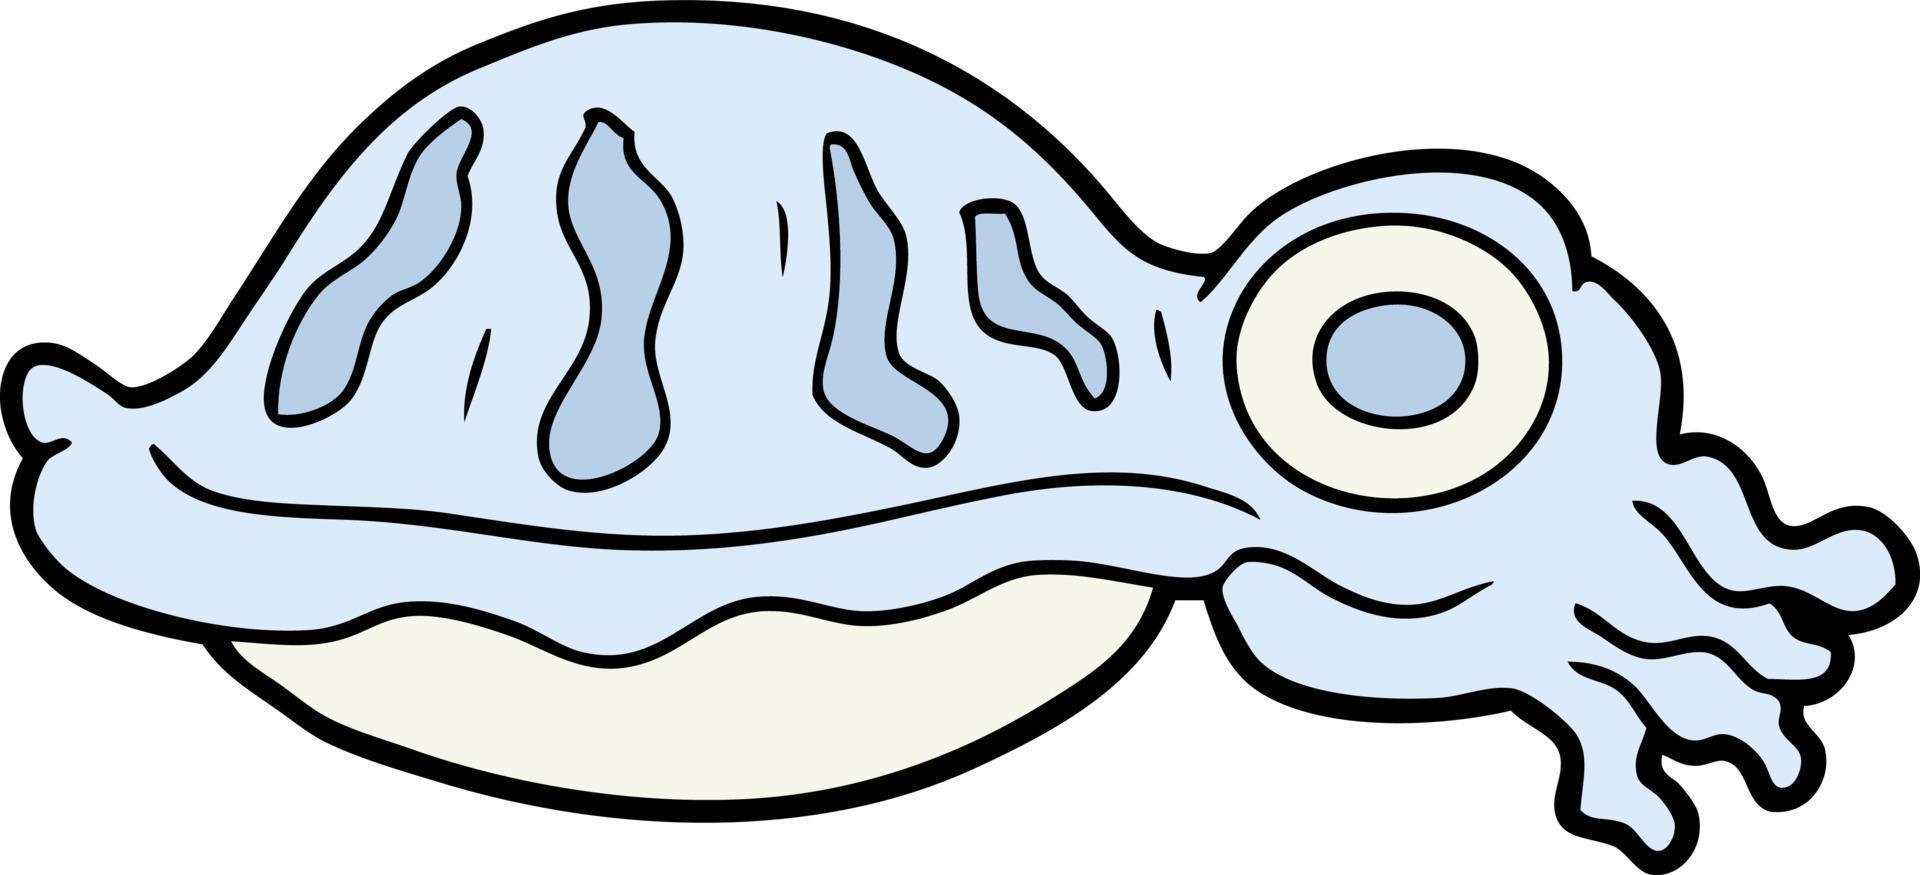 cartoon blue squid vector